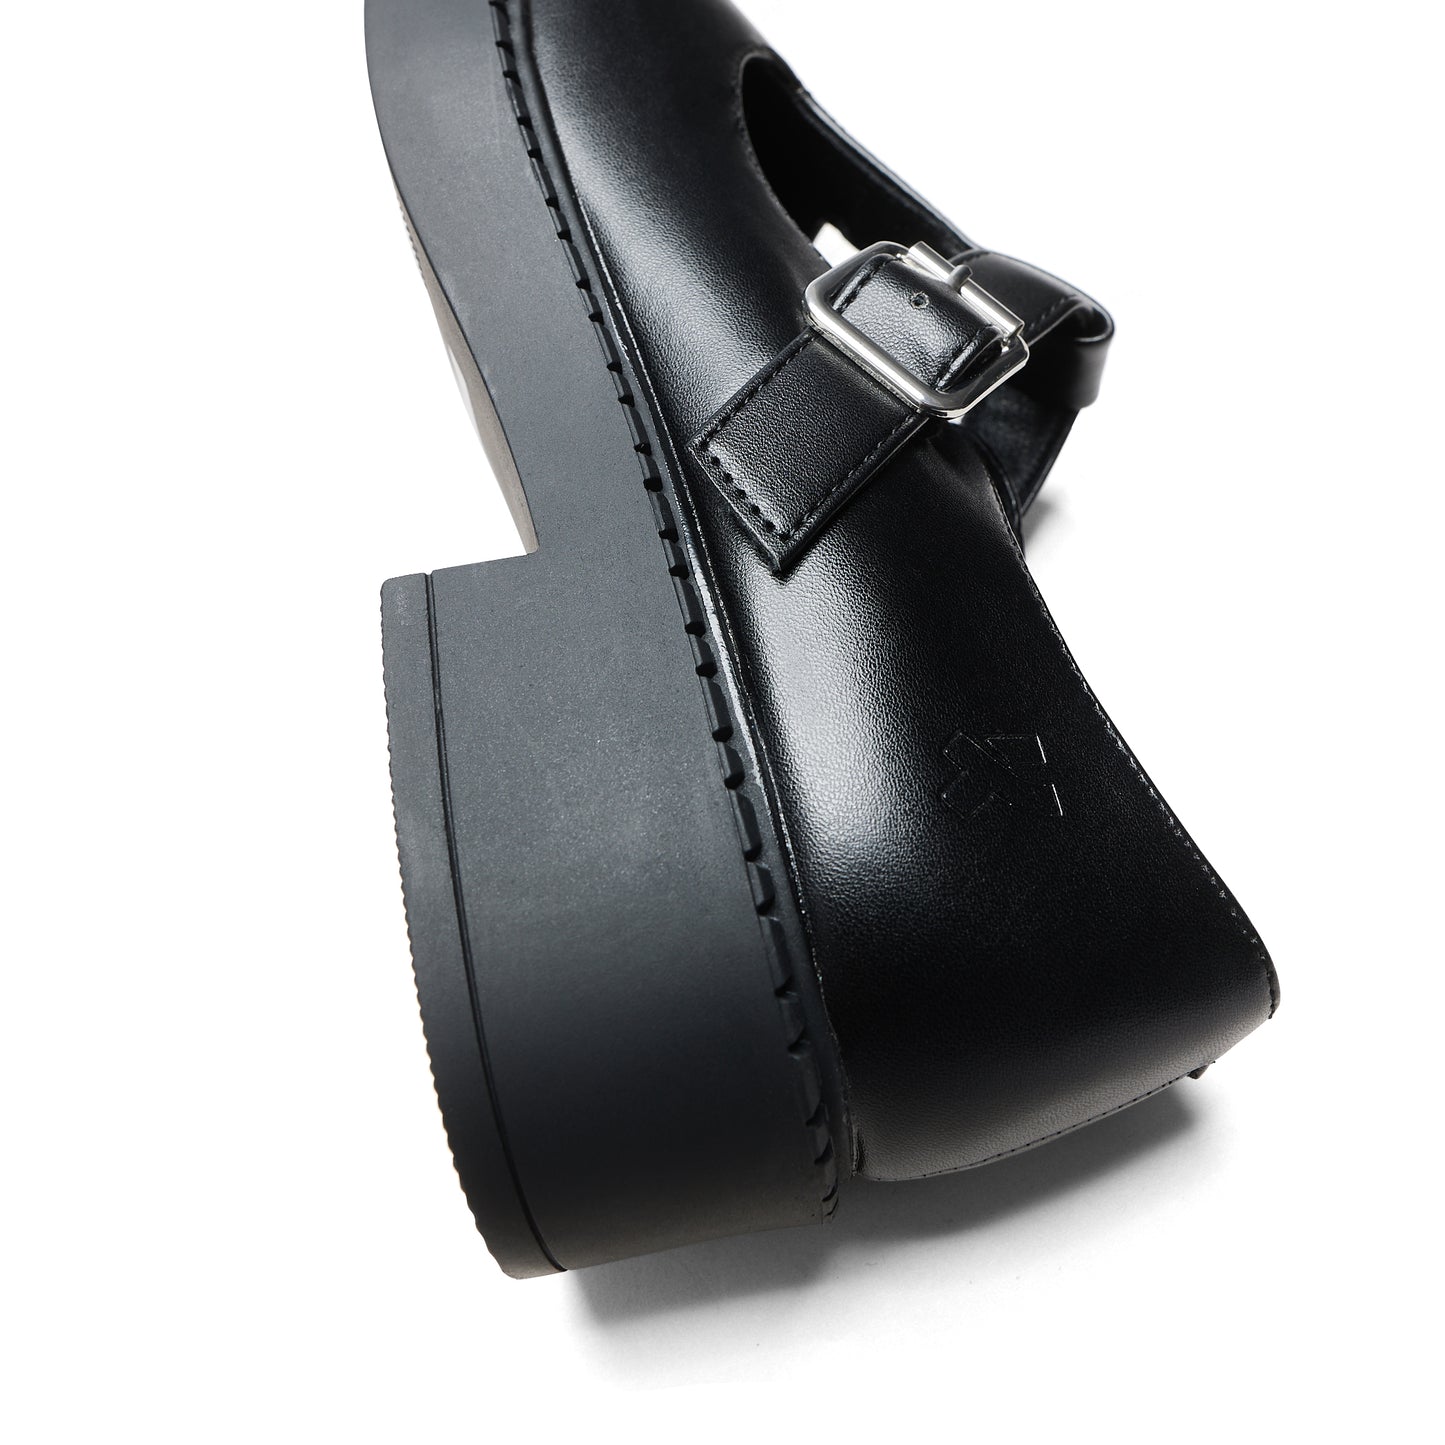 Simido Tale Mary Janes - Mary Janes - KOI Footwear - Black - Top Side Detail